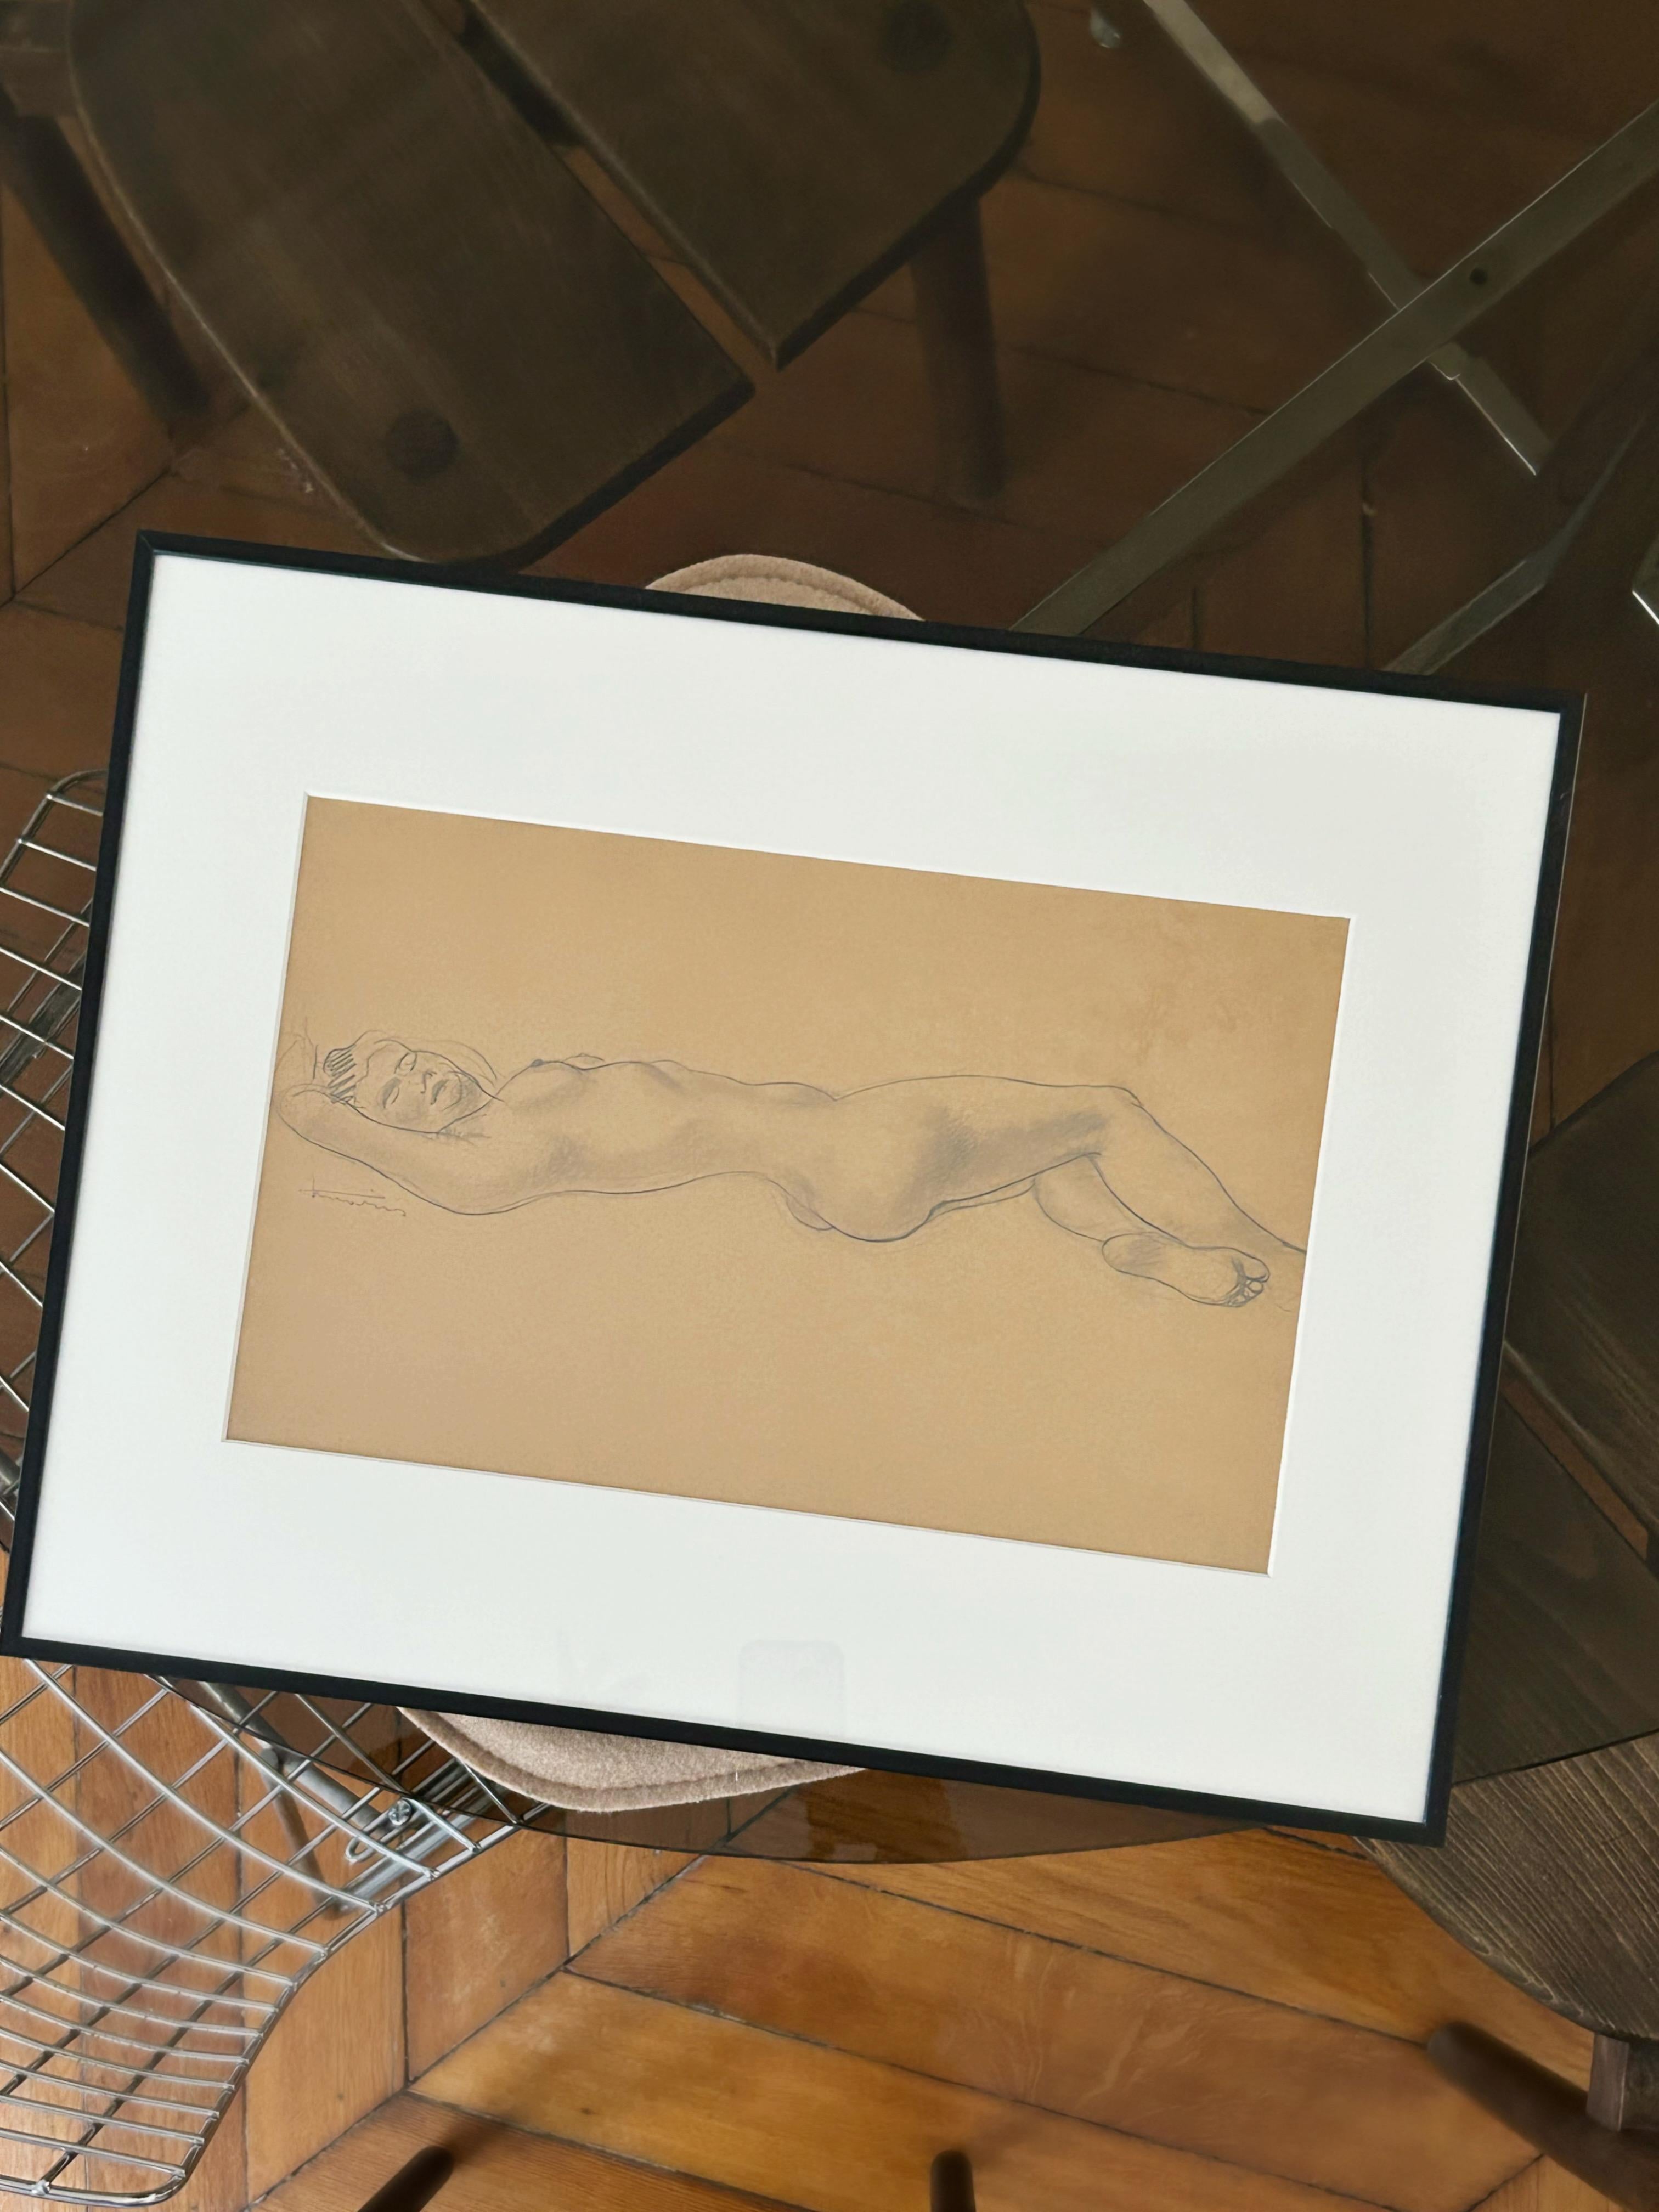 Jean Martin Nude - Female nude, circa 1940, pencil on paper